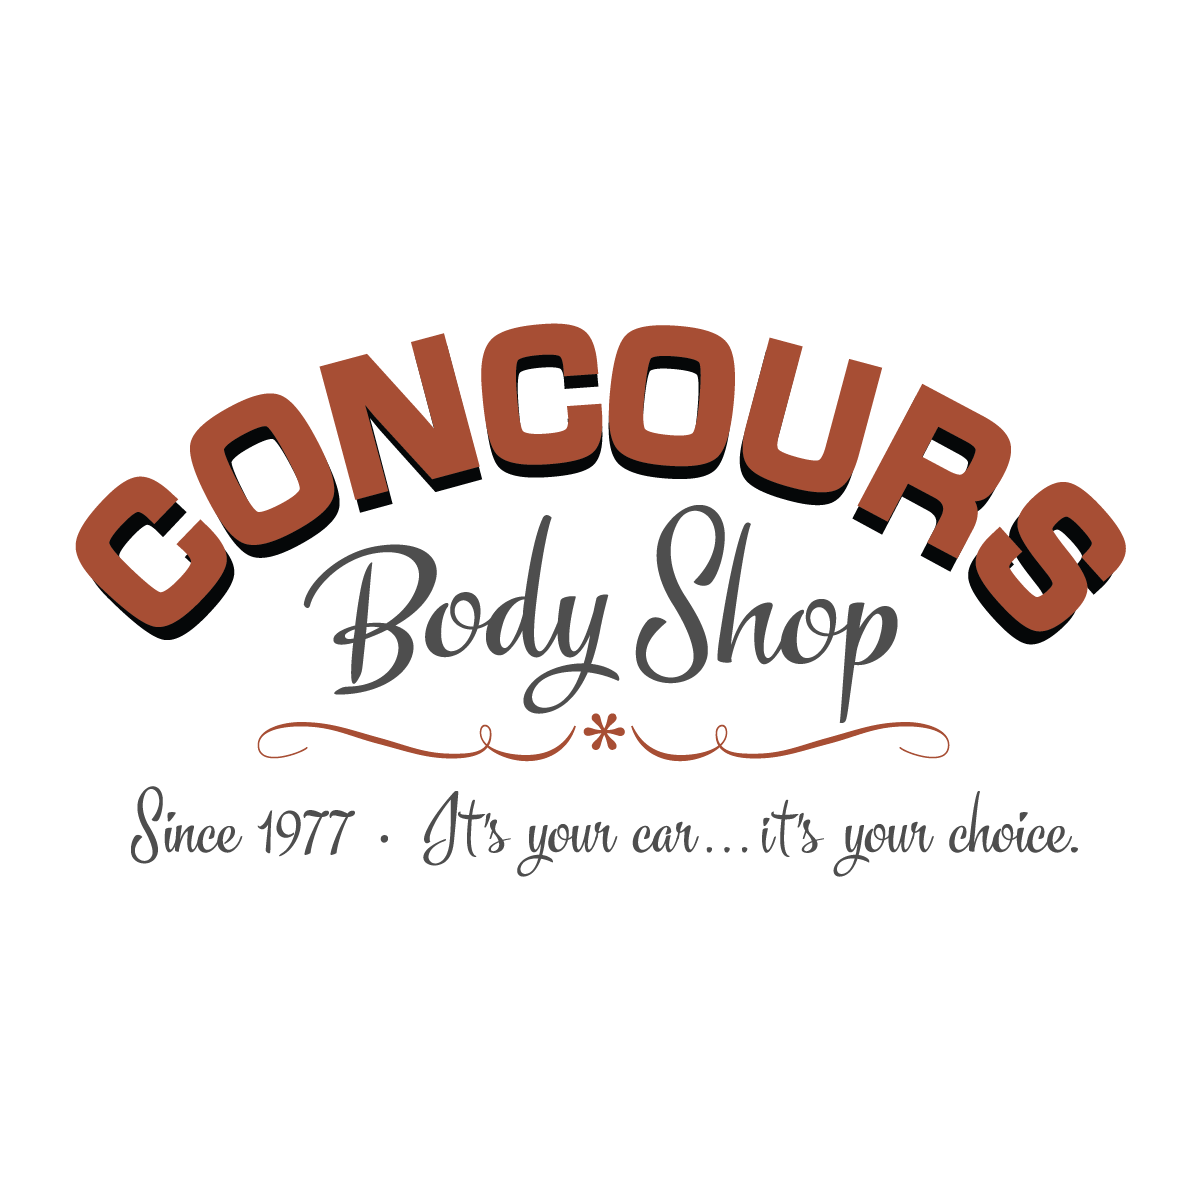 Concours Body Shop Logo